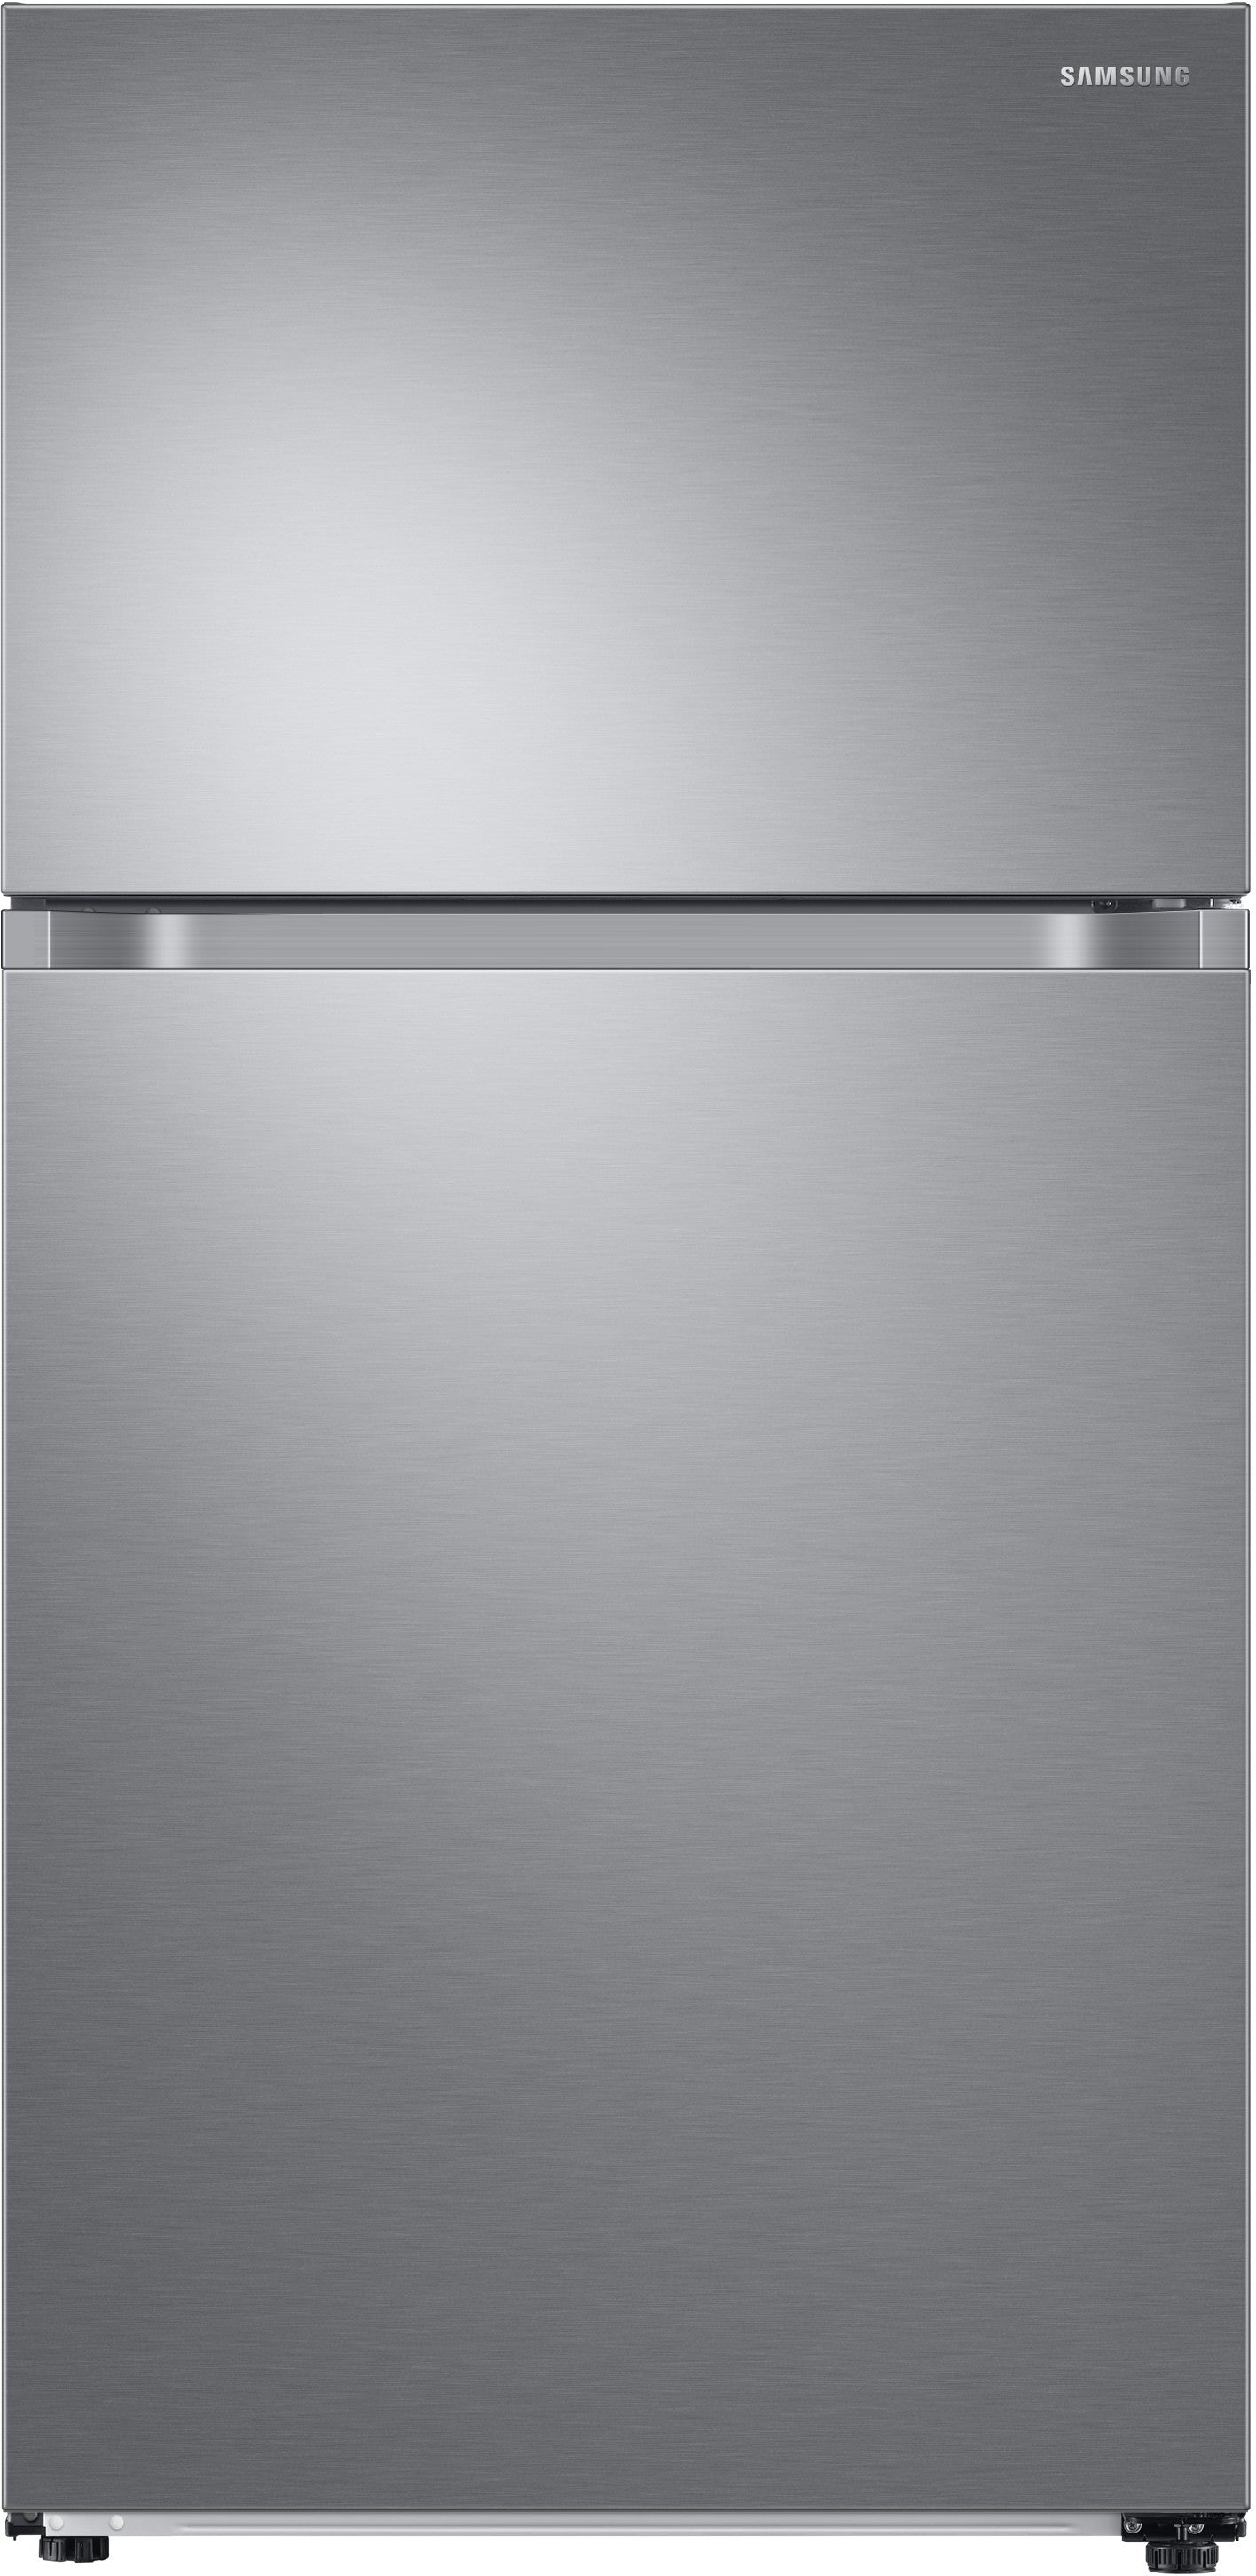 Samsung RT21M6213SR/AA 21 Cu. Ft. Top Freezer Refrigerator With Flex zone - Samsung Parts USA